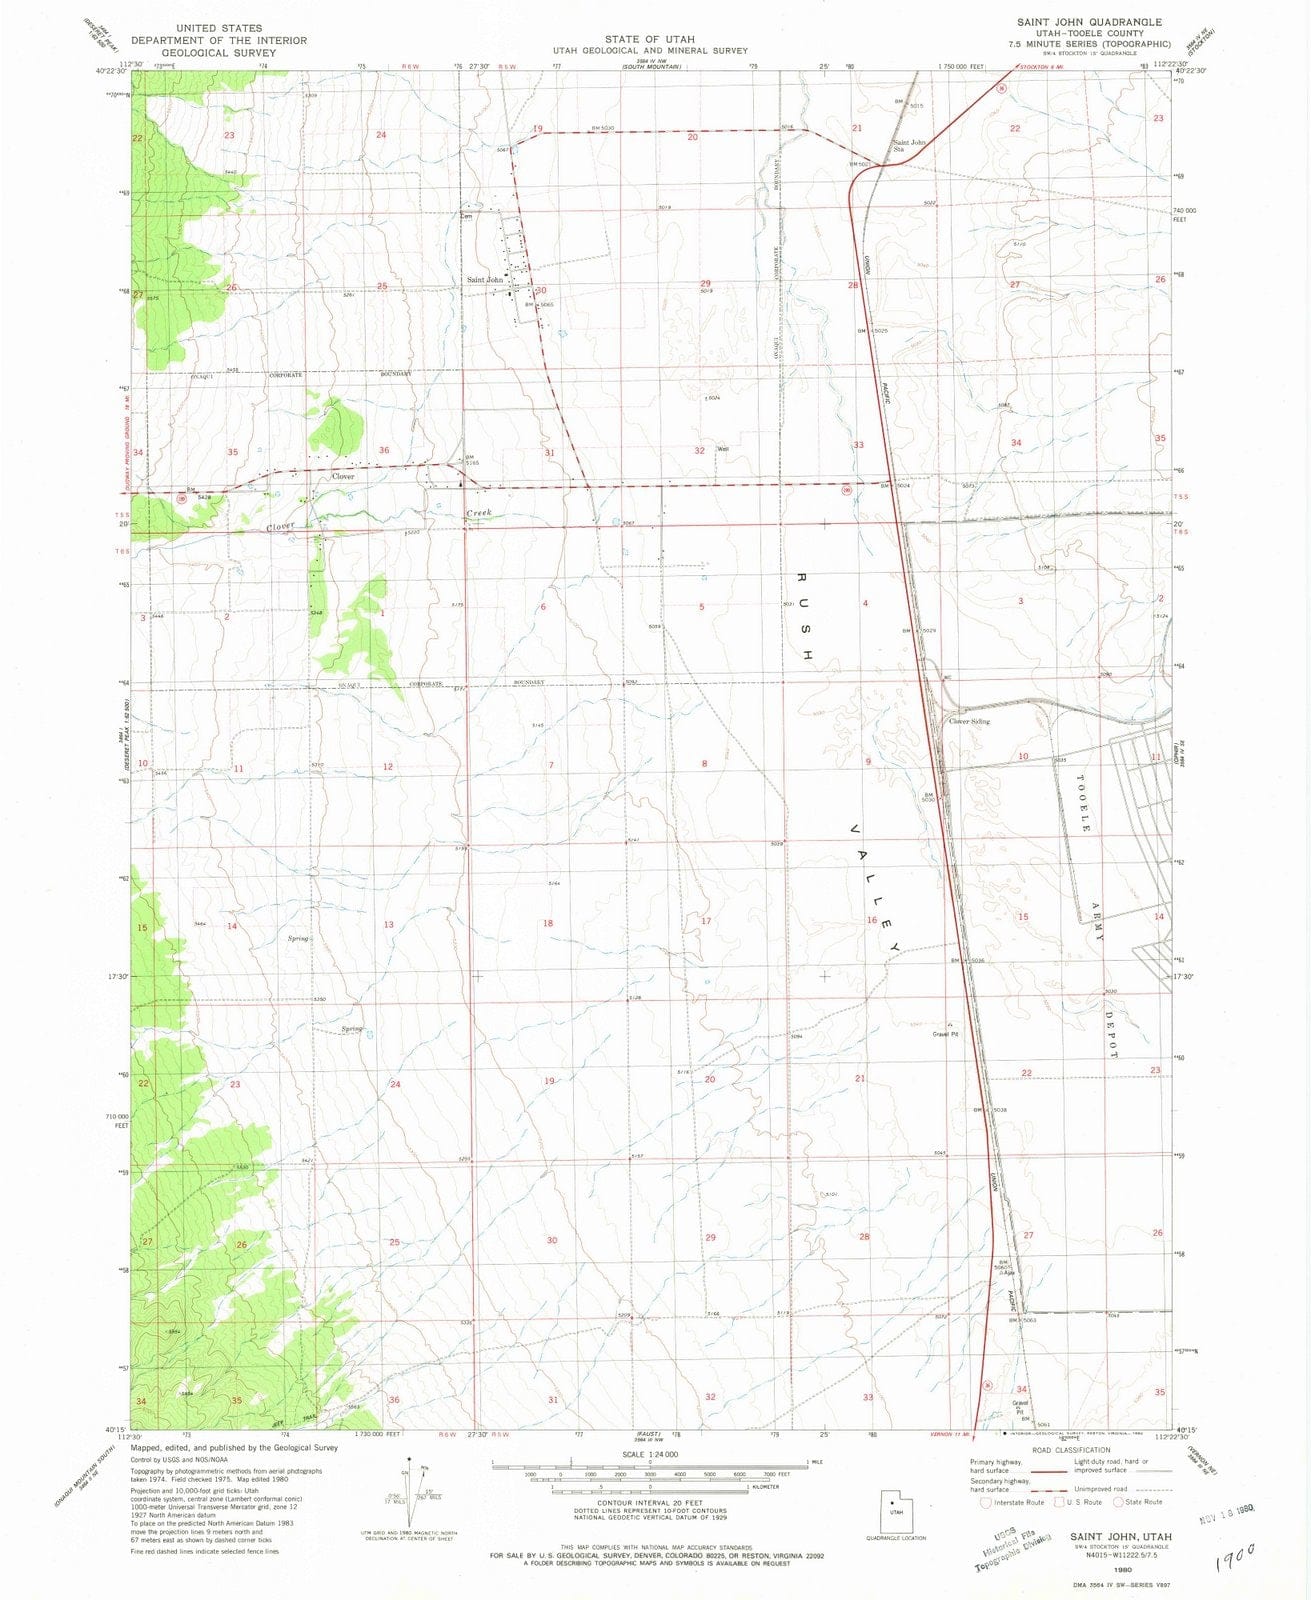 1980 Saint John, UT - Utah - USGS Topographic Map